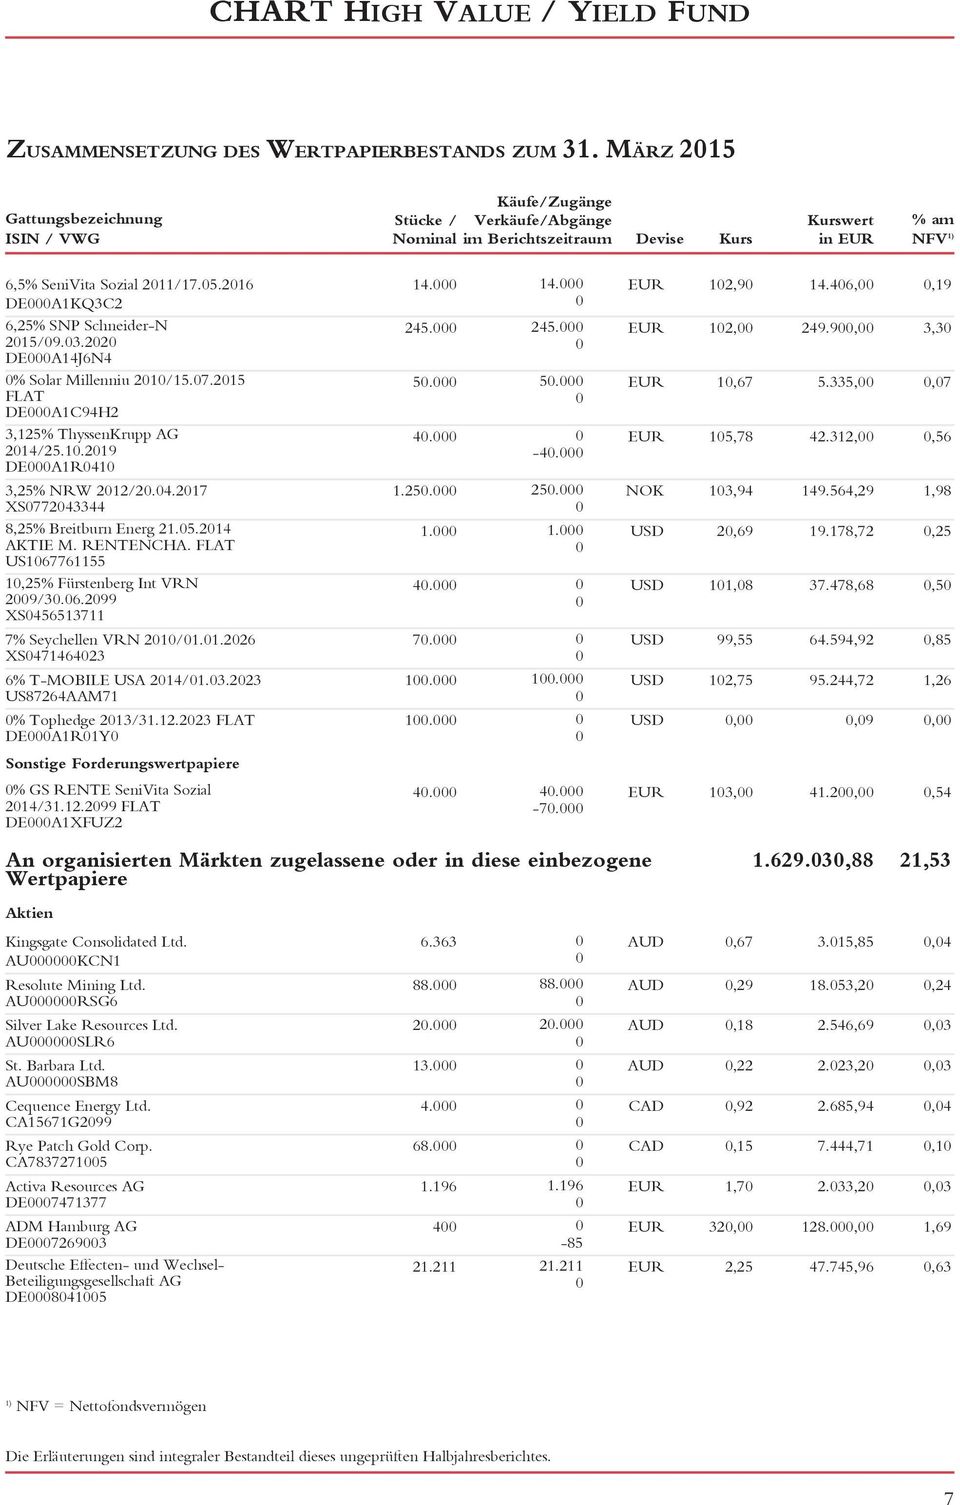 46,,19 DEA1KQ3C2 6,25% SNP Schneider-N 245. 245. EUR 12, 249.9, 3,3 215/9.3.22 DEA14J6N4 % Solar Millenniu 21/15.7.215 5. 5. EUR 1,67 5.335,,7 FLAT DEA1C94H2 3,125% ThyssenKrupp AG 4. EUR 15,78 42.